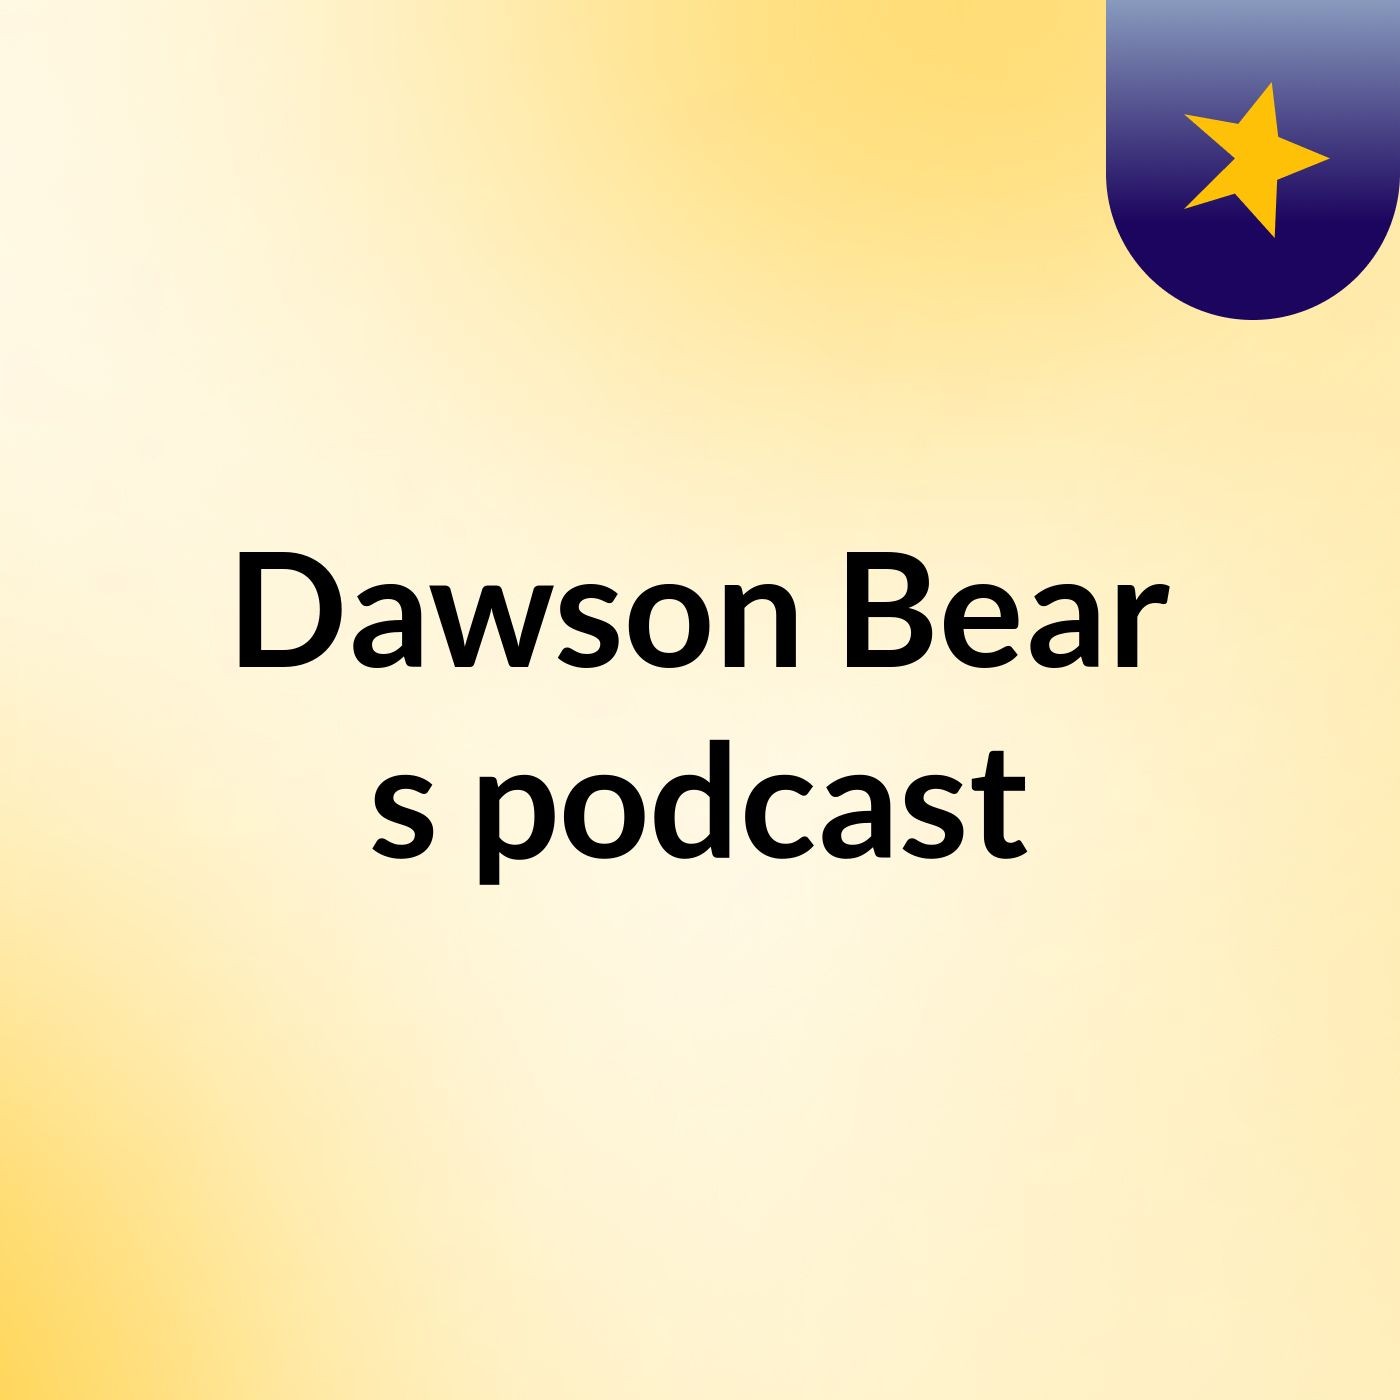 Episode 3 - Dawson Bear's podcast